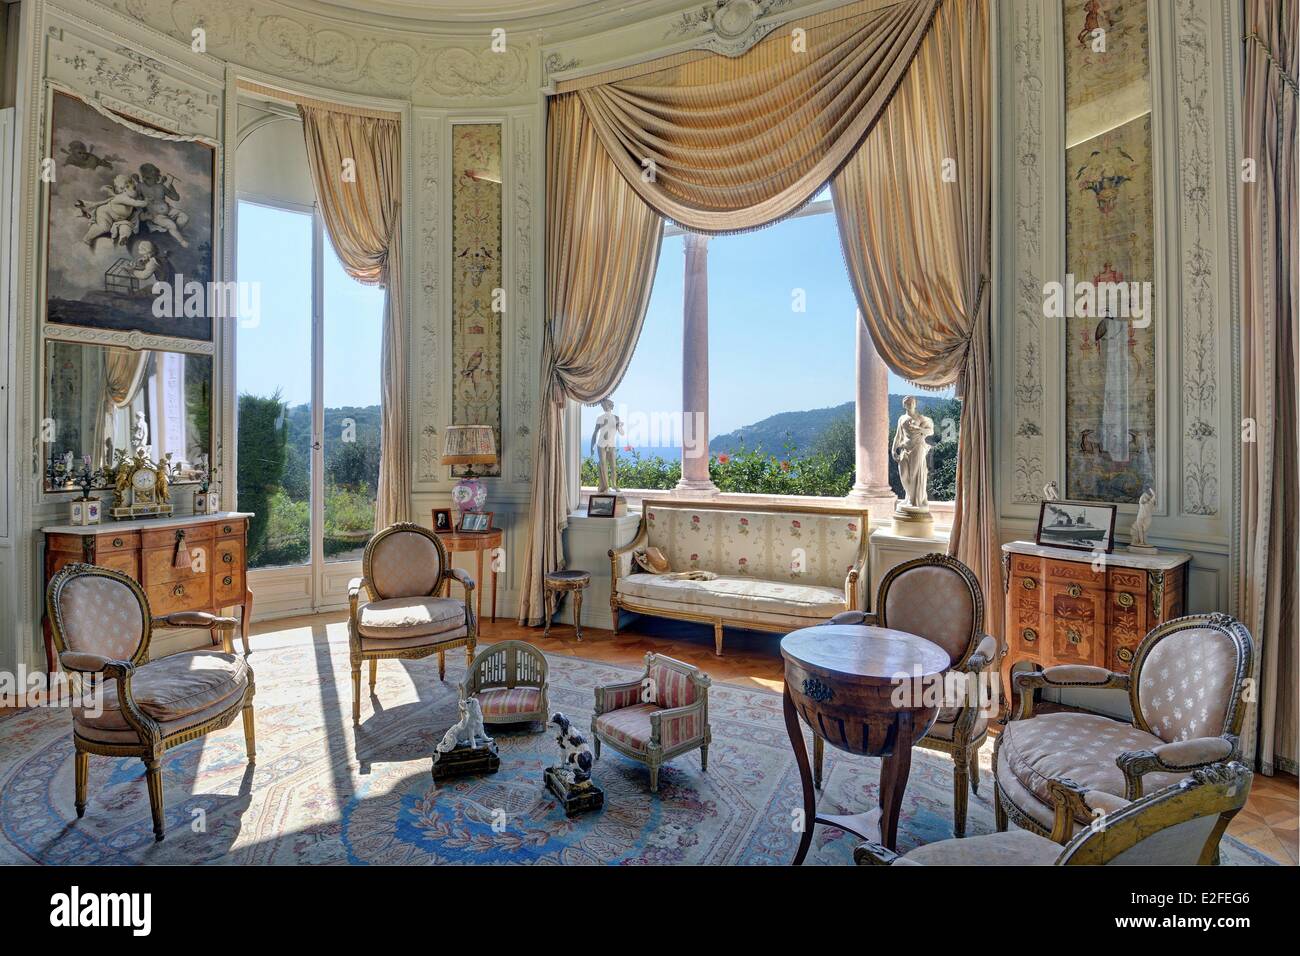 Francia, Alpes Maritimes, villa Ephrussi de Rothschild, il bedchamber Foto Stock